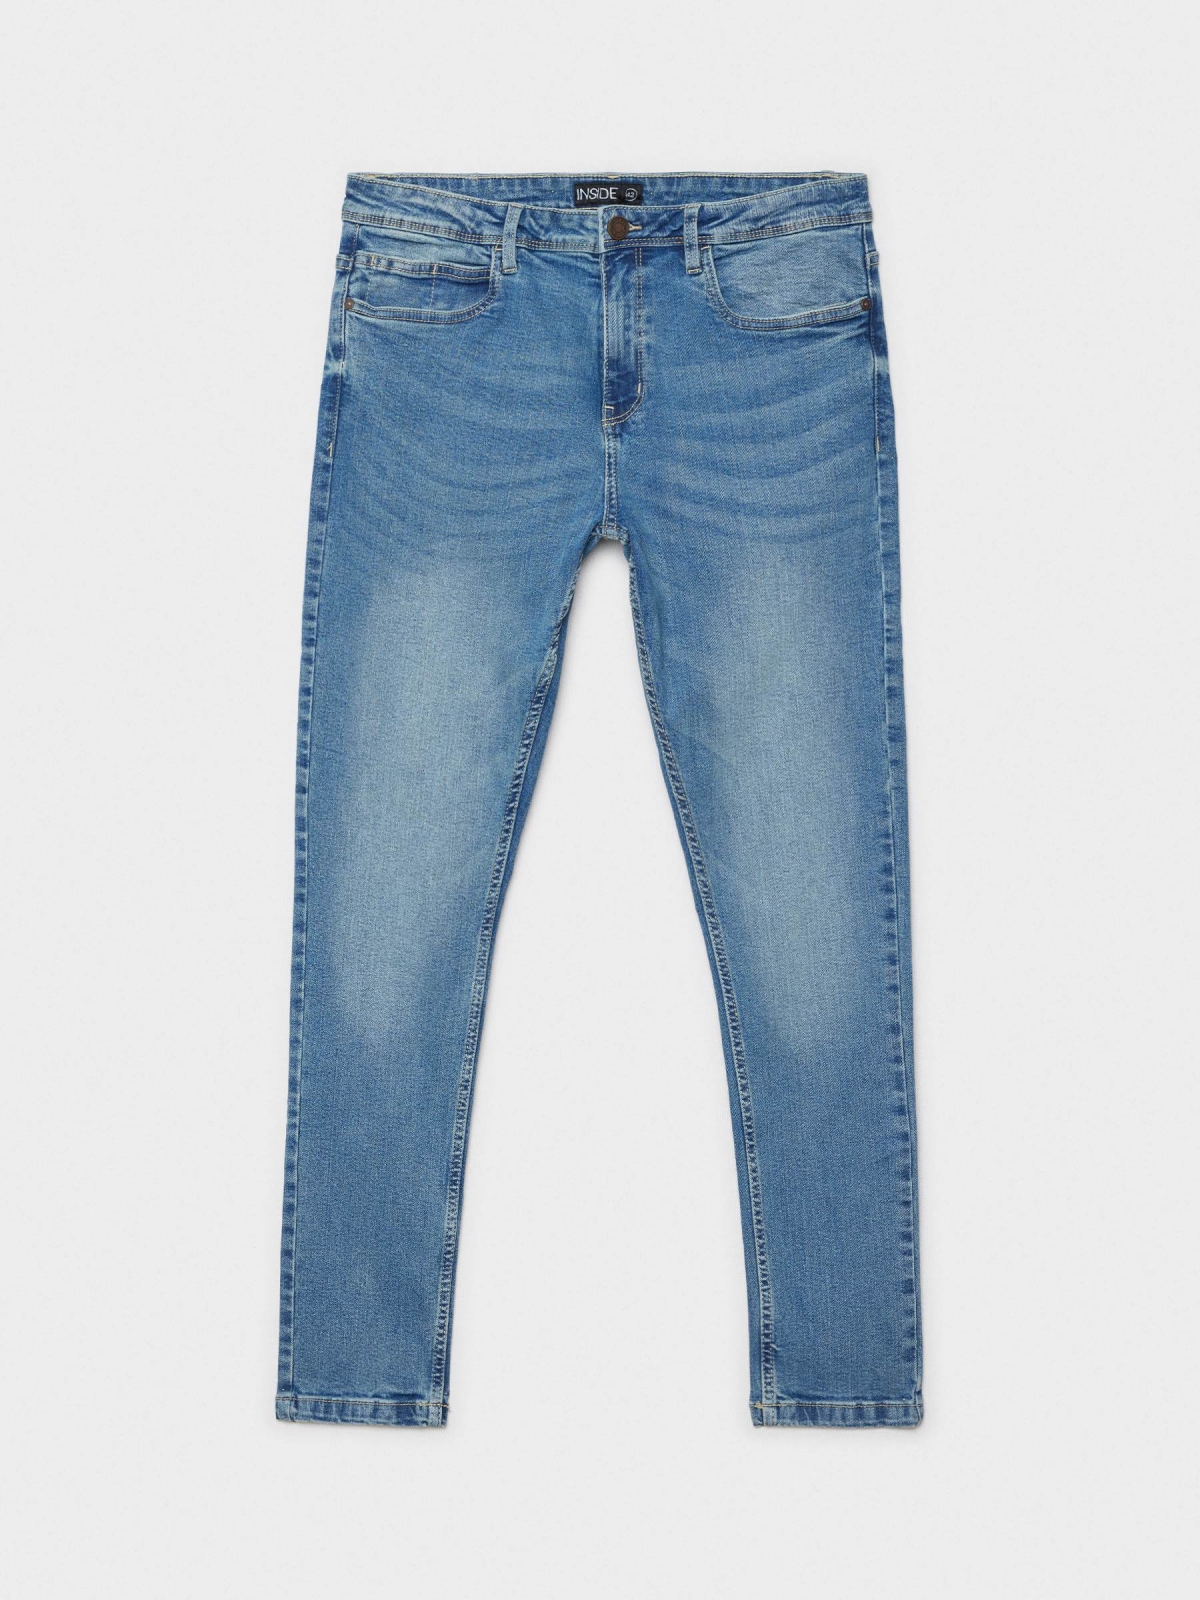  Worn skinny jeans blue